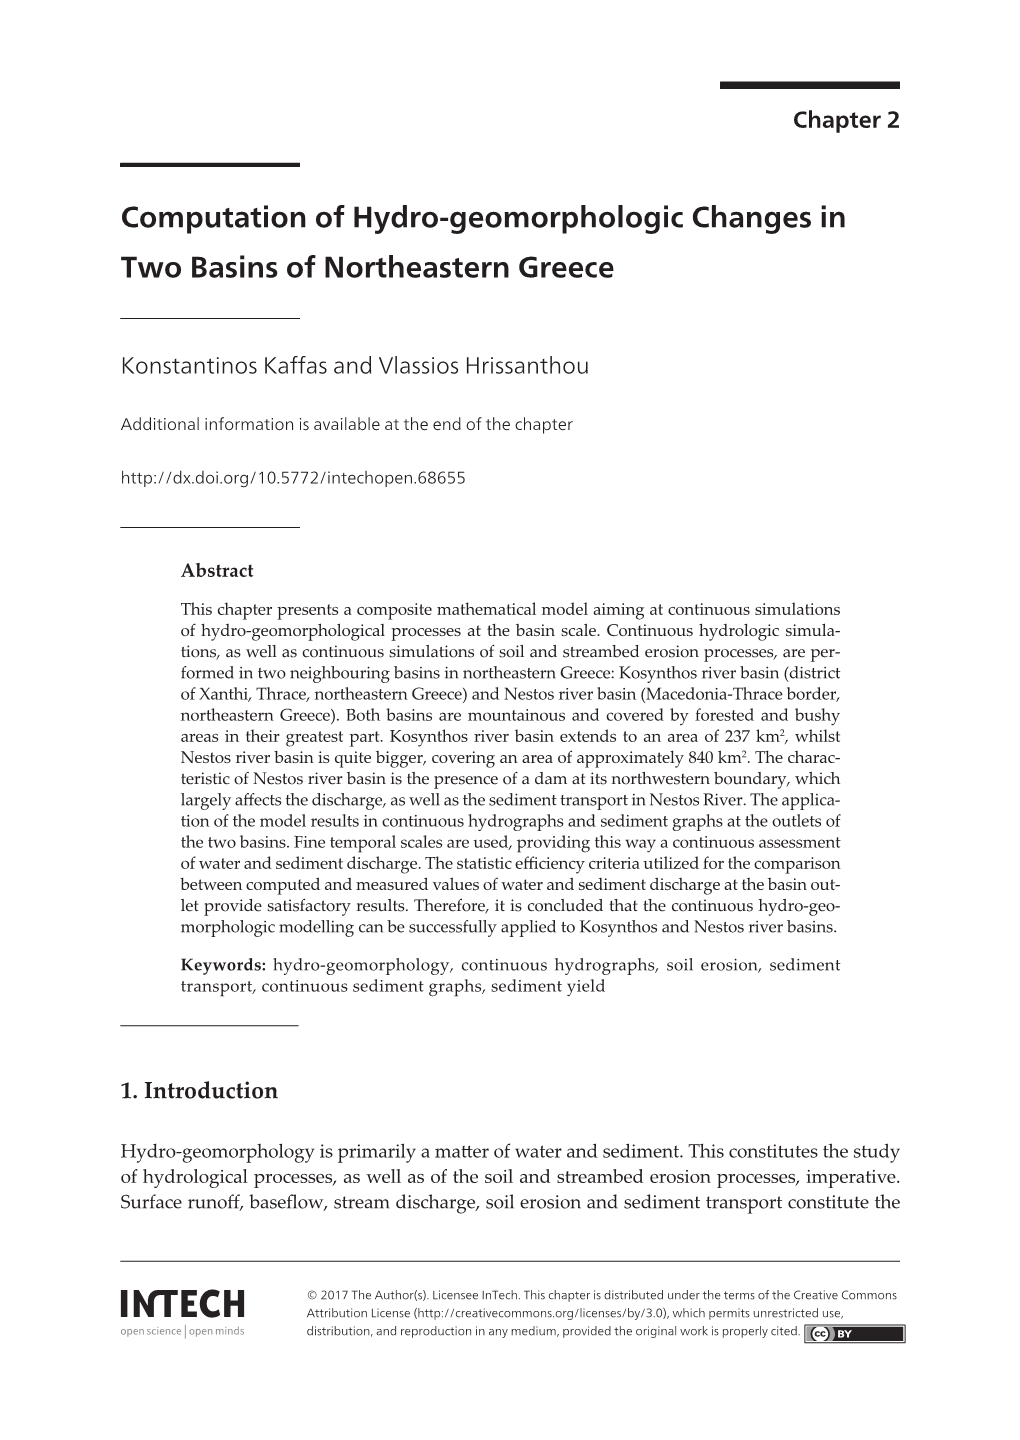 Computation of Hydro-Geomorphologic Changes In